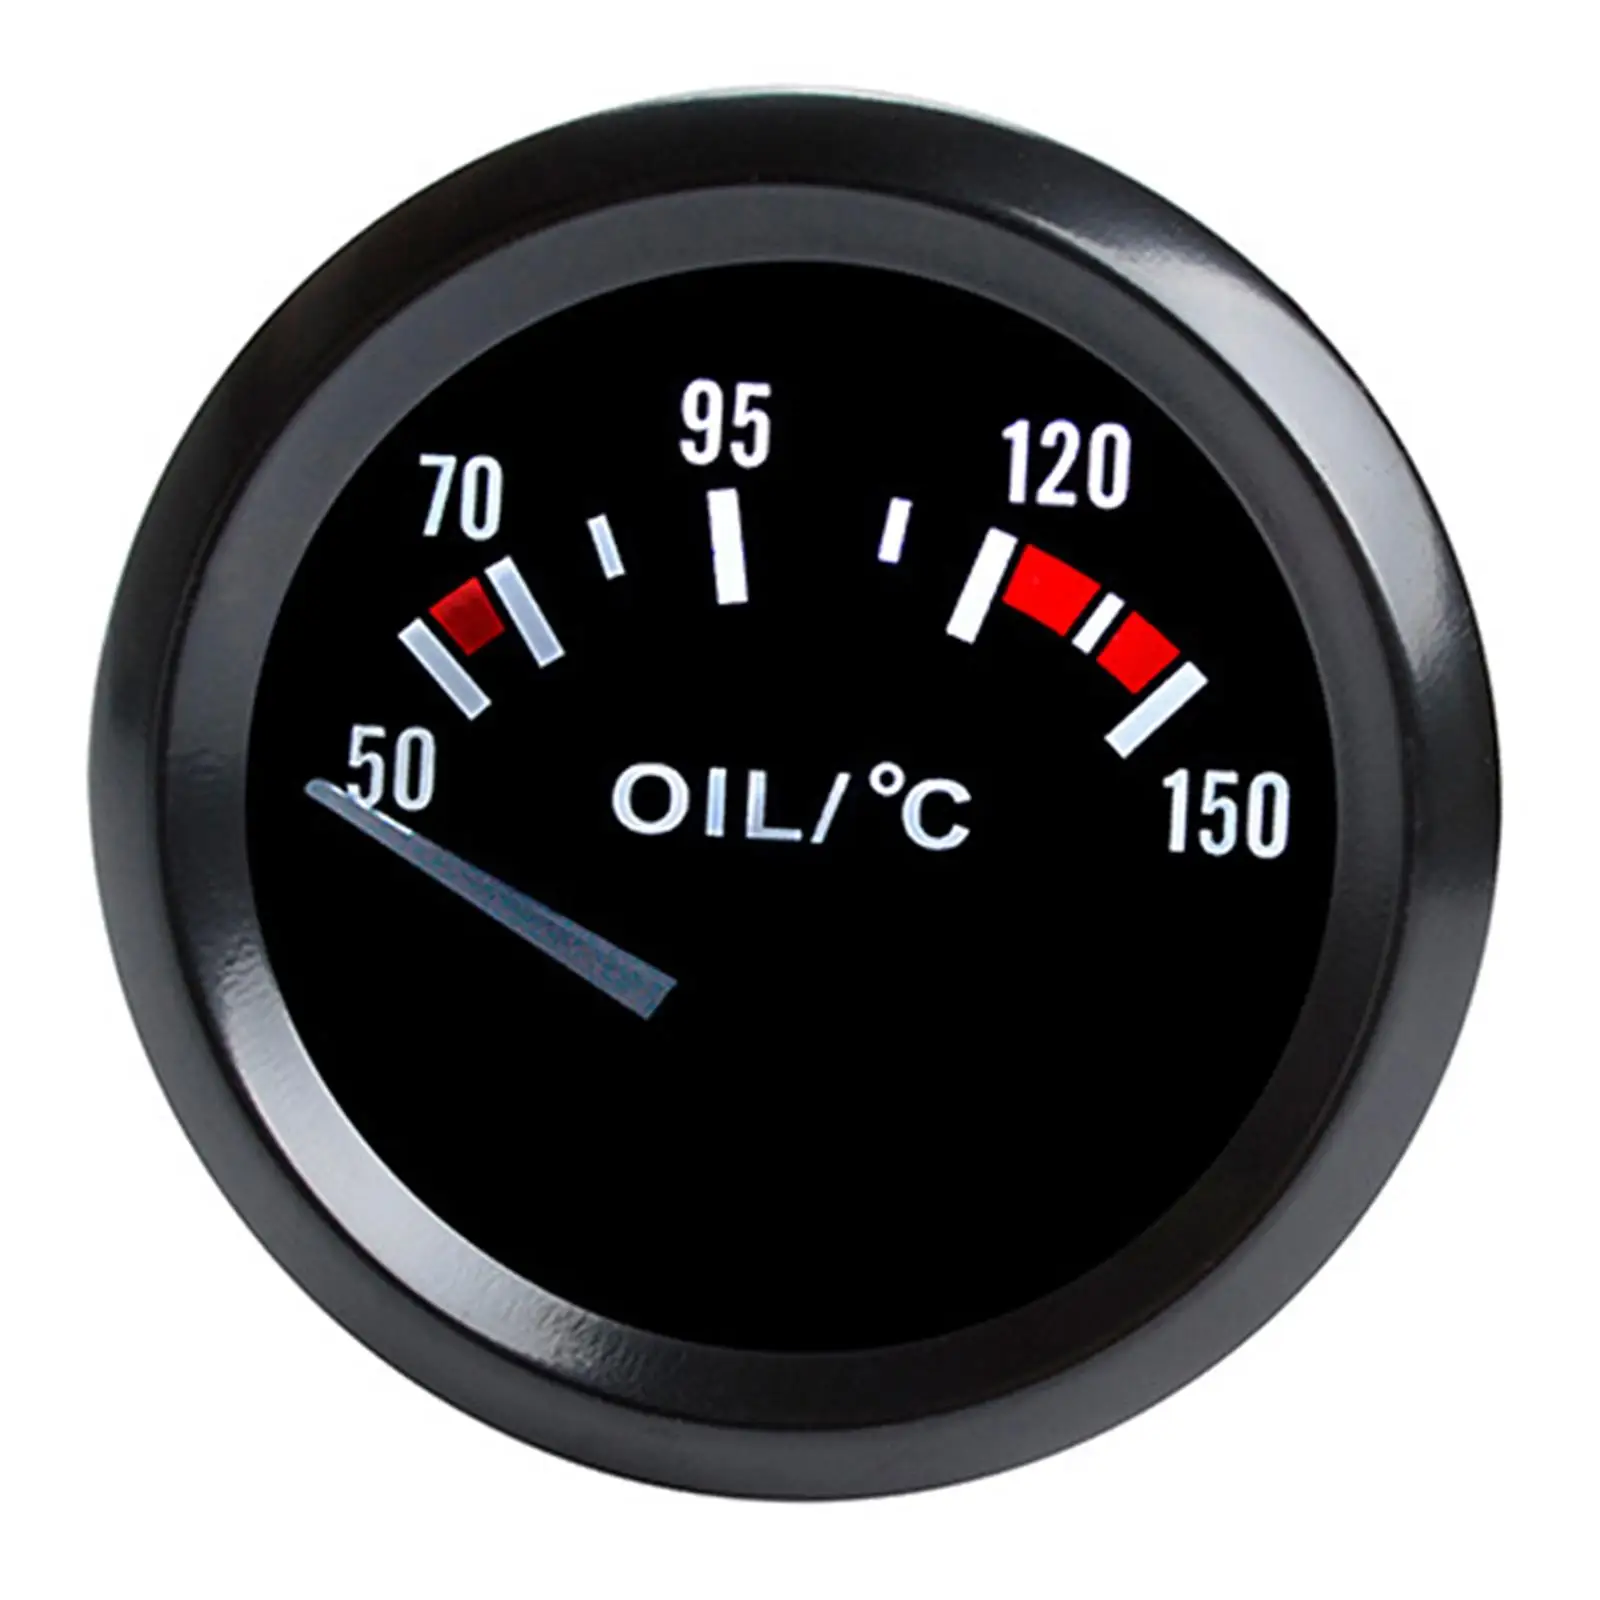 Oil Temp Gauge Oil Temperature Gauge 52mm Car Oil Temp Gauge Meter for Vehicle